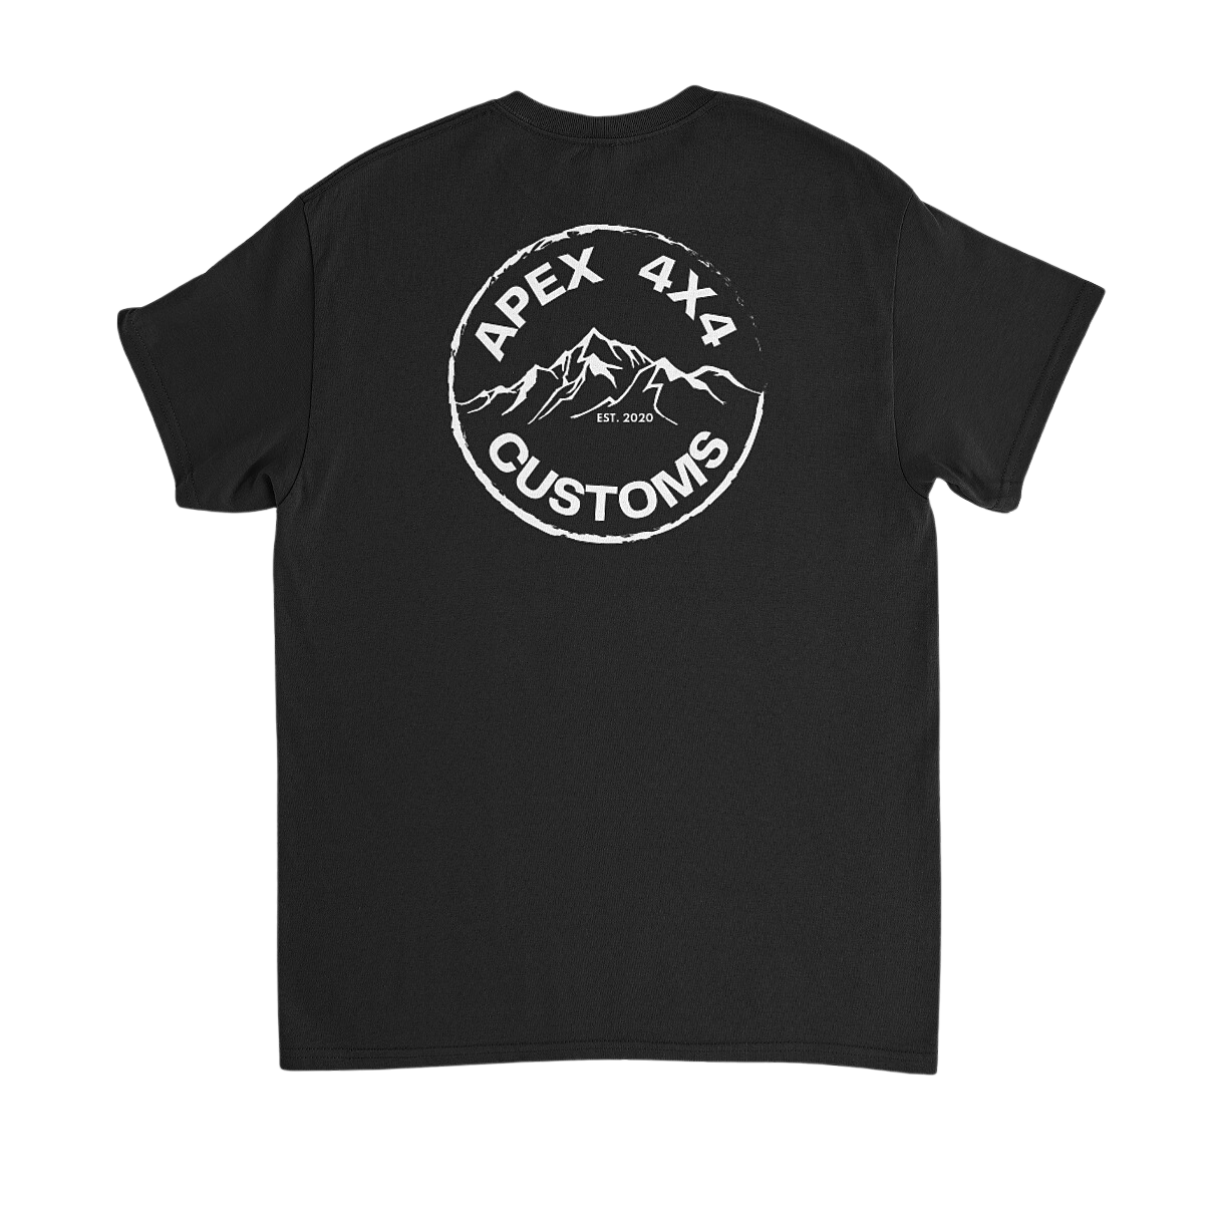 Apex 4x4 Customs T-Shirt